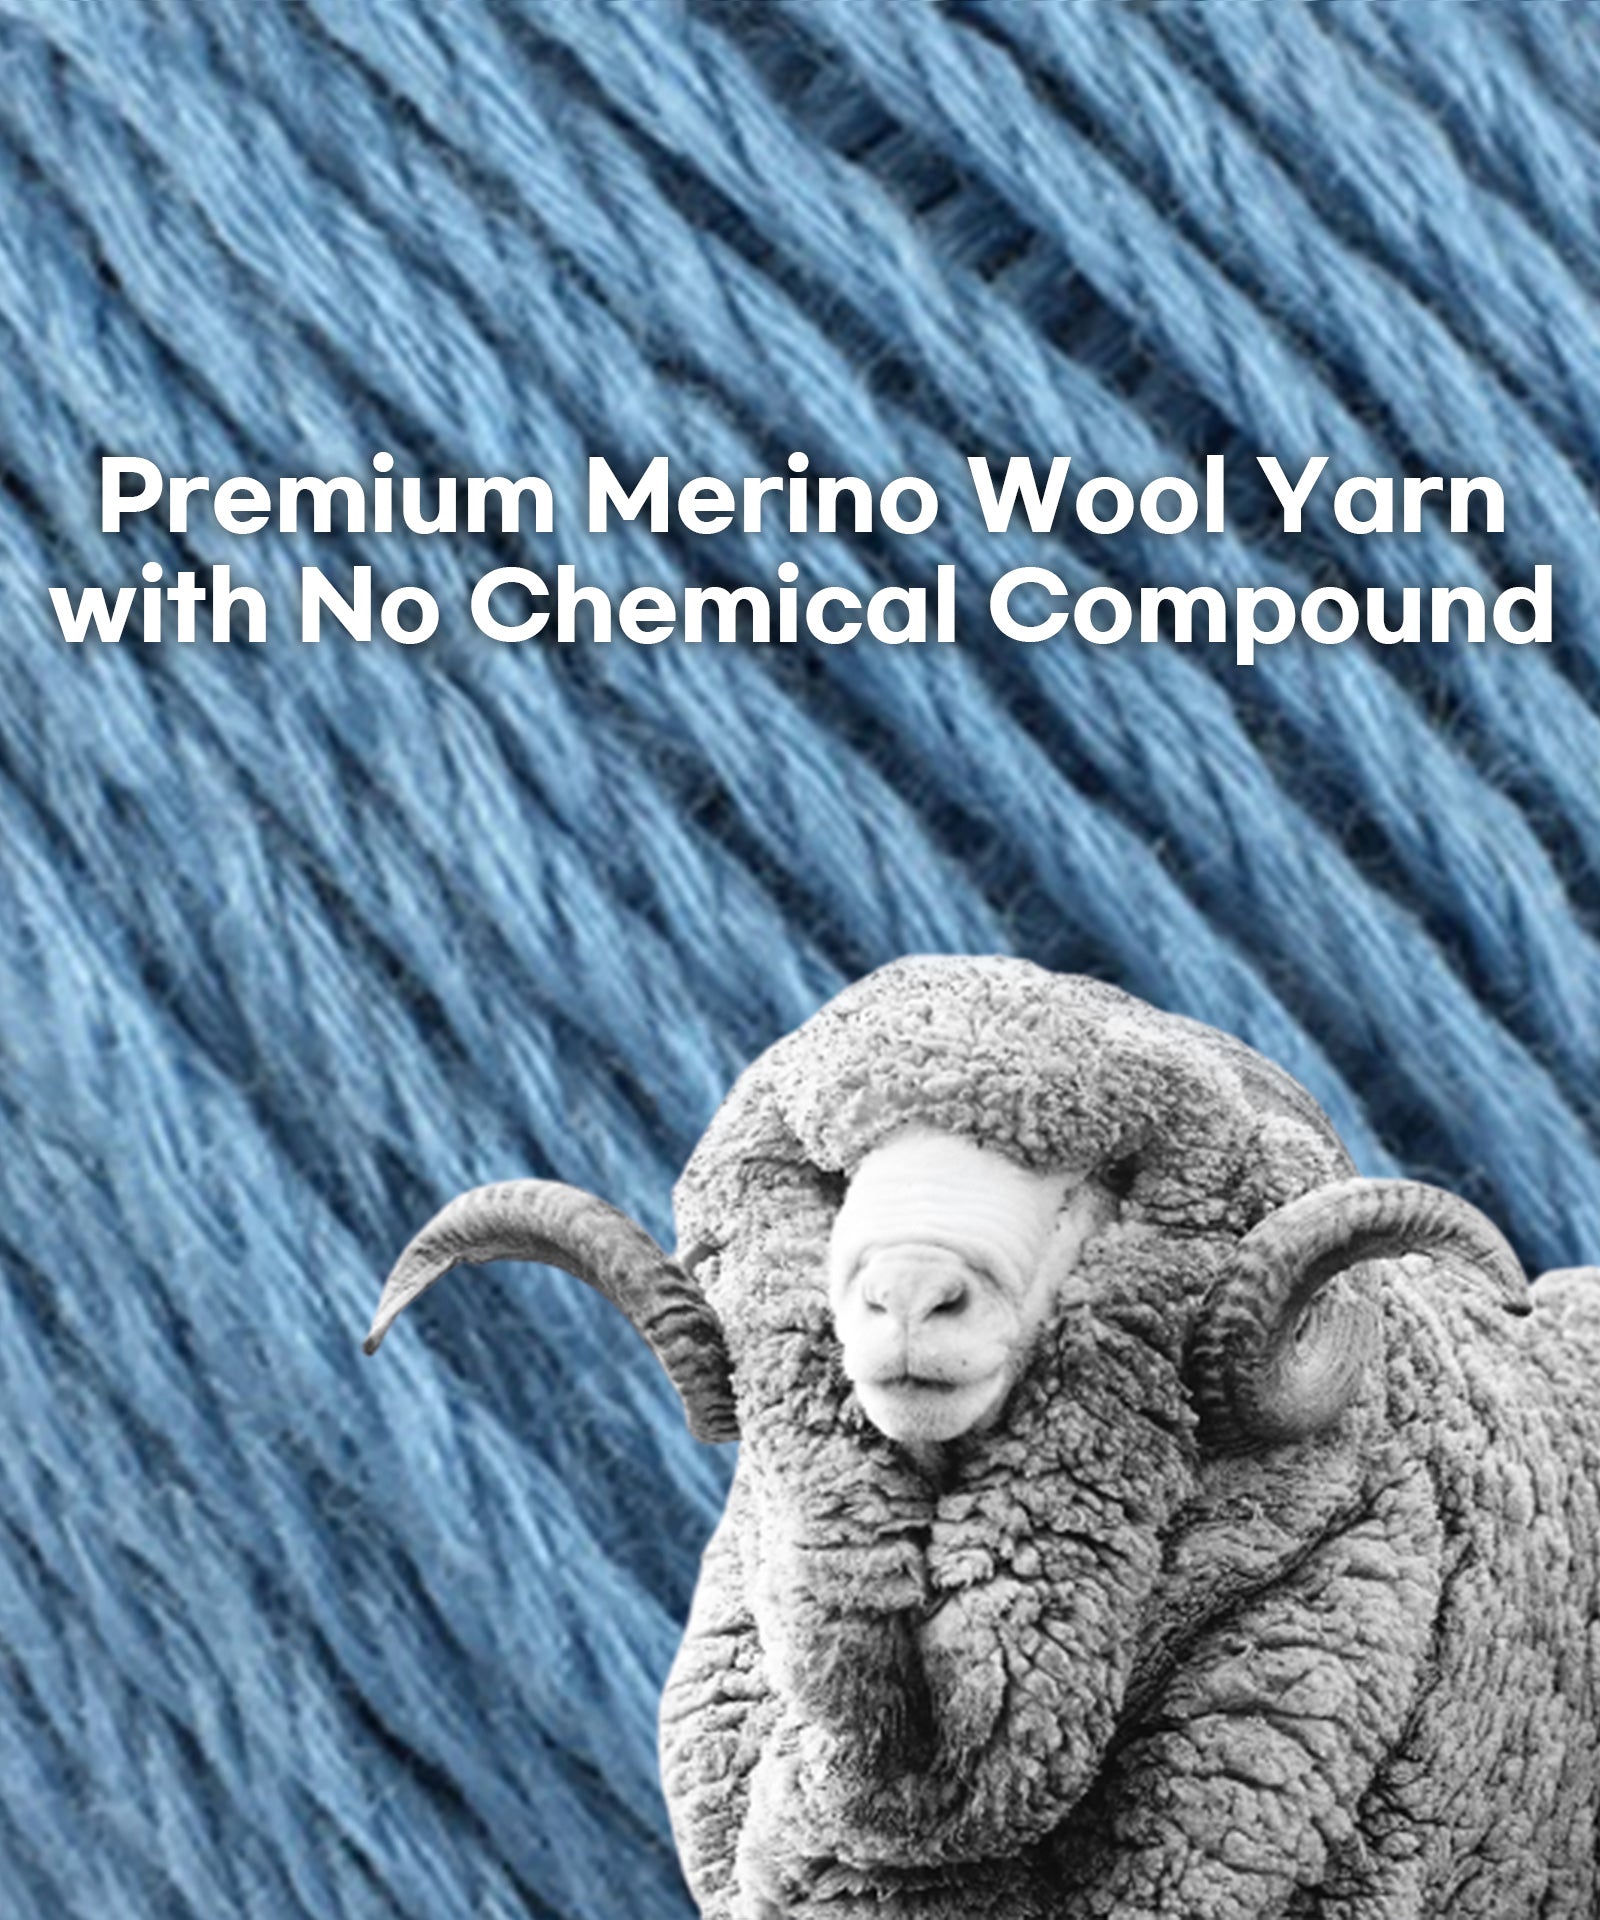 Premium merino wool yarn with no chemical compound.